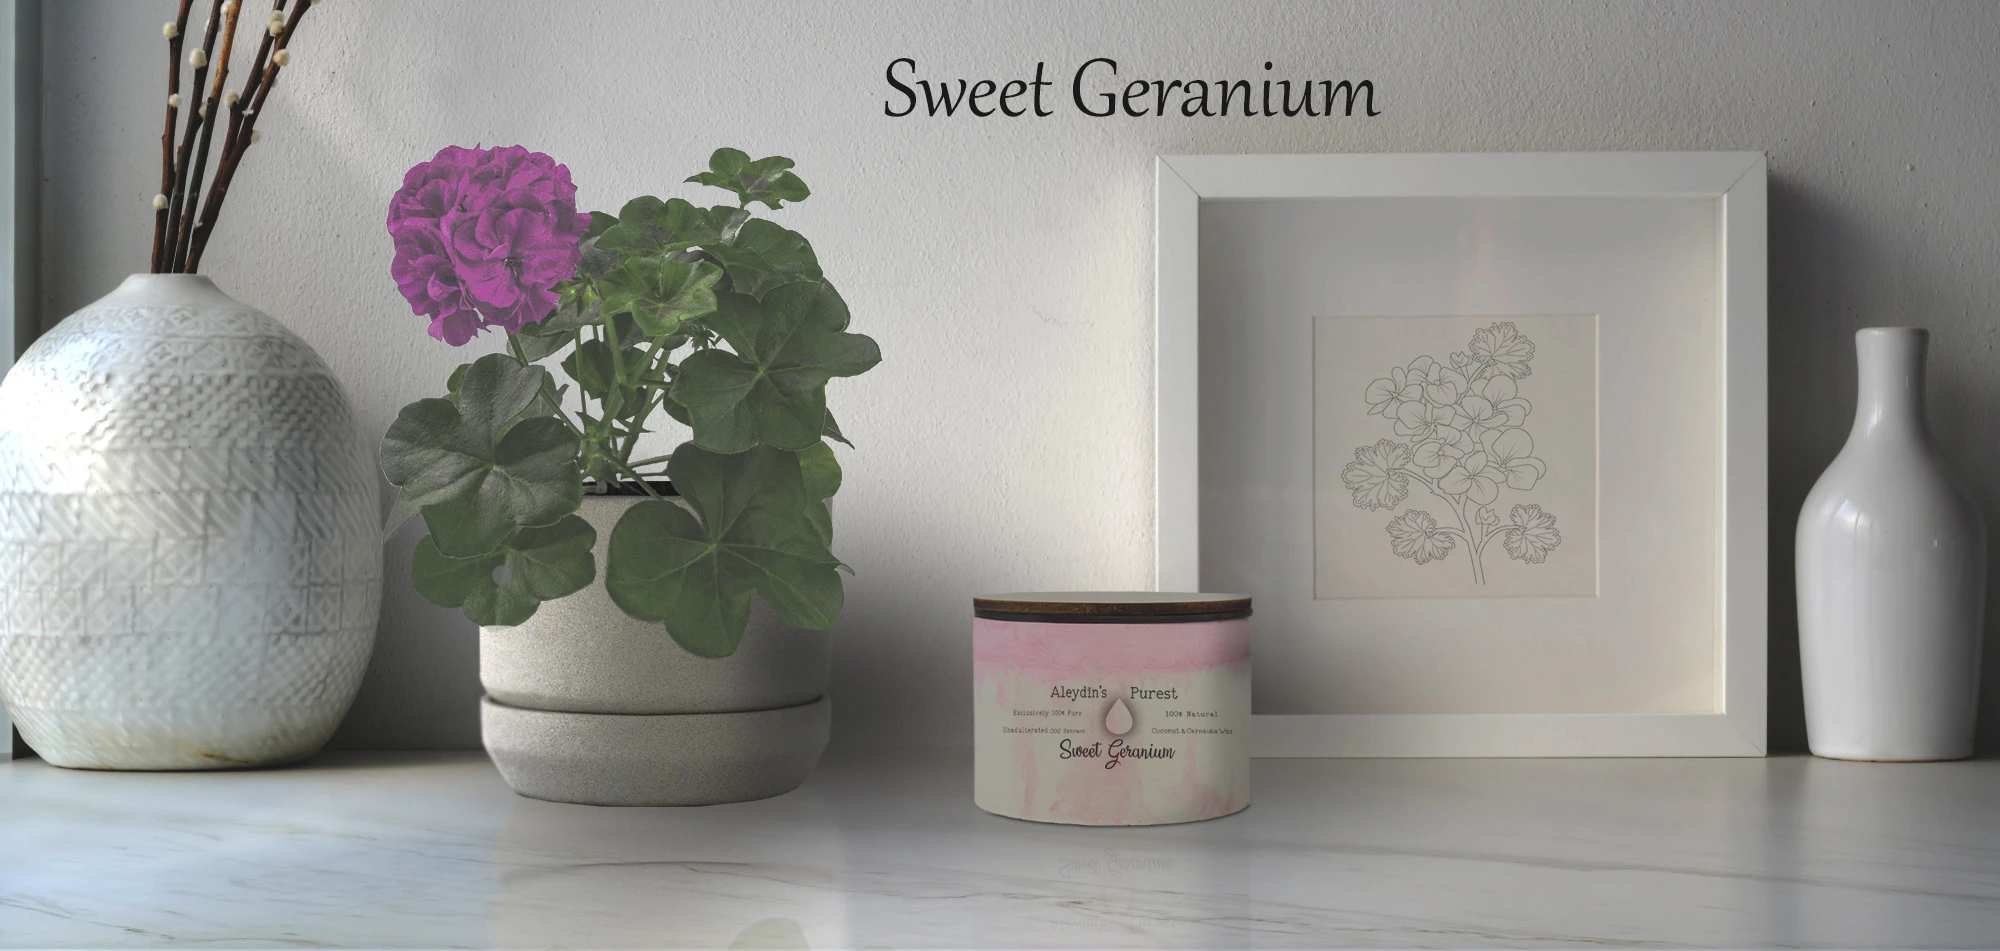 766-sweet-geranium-product-promo-photo-pink-flower-16761374454911.jpg